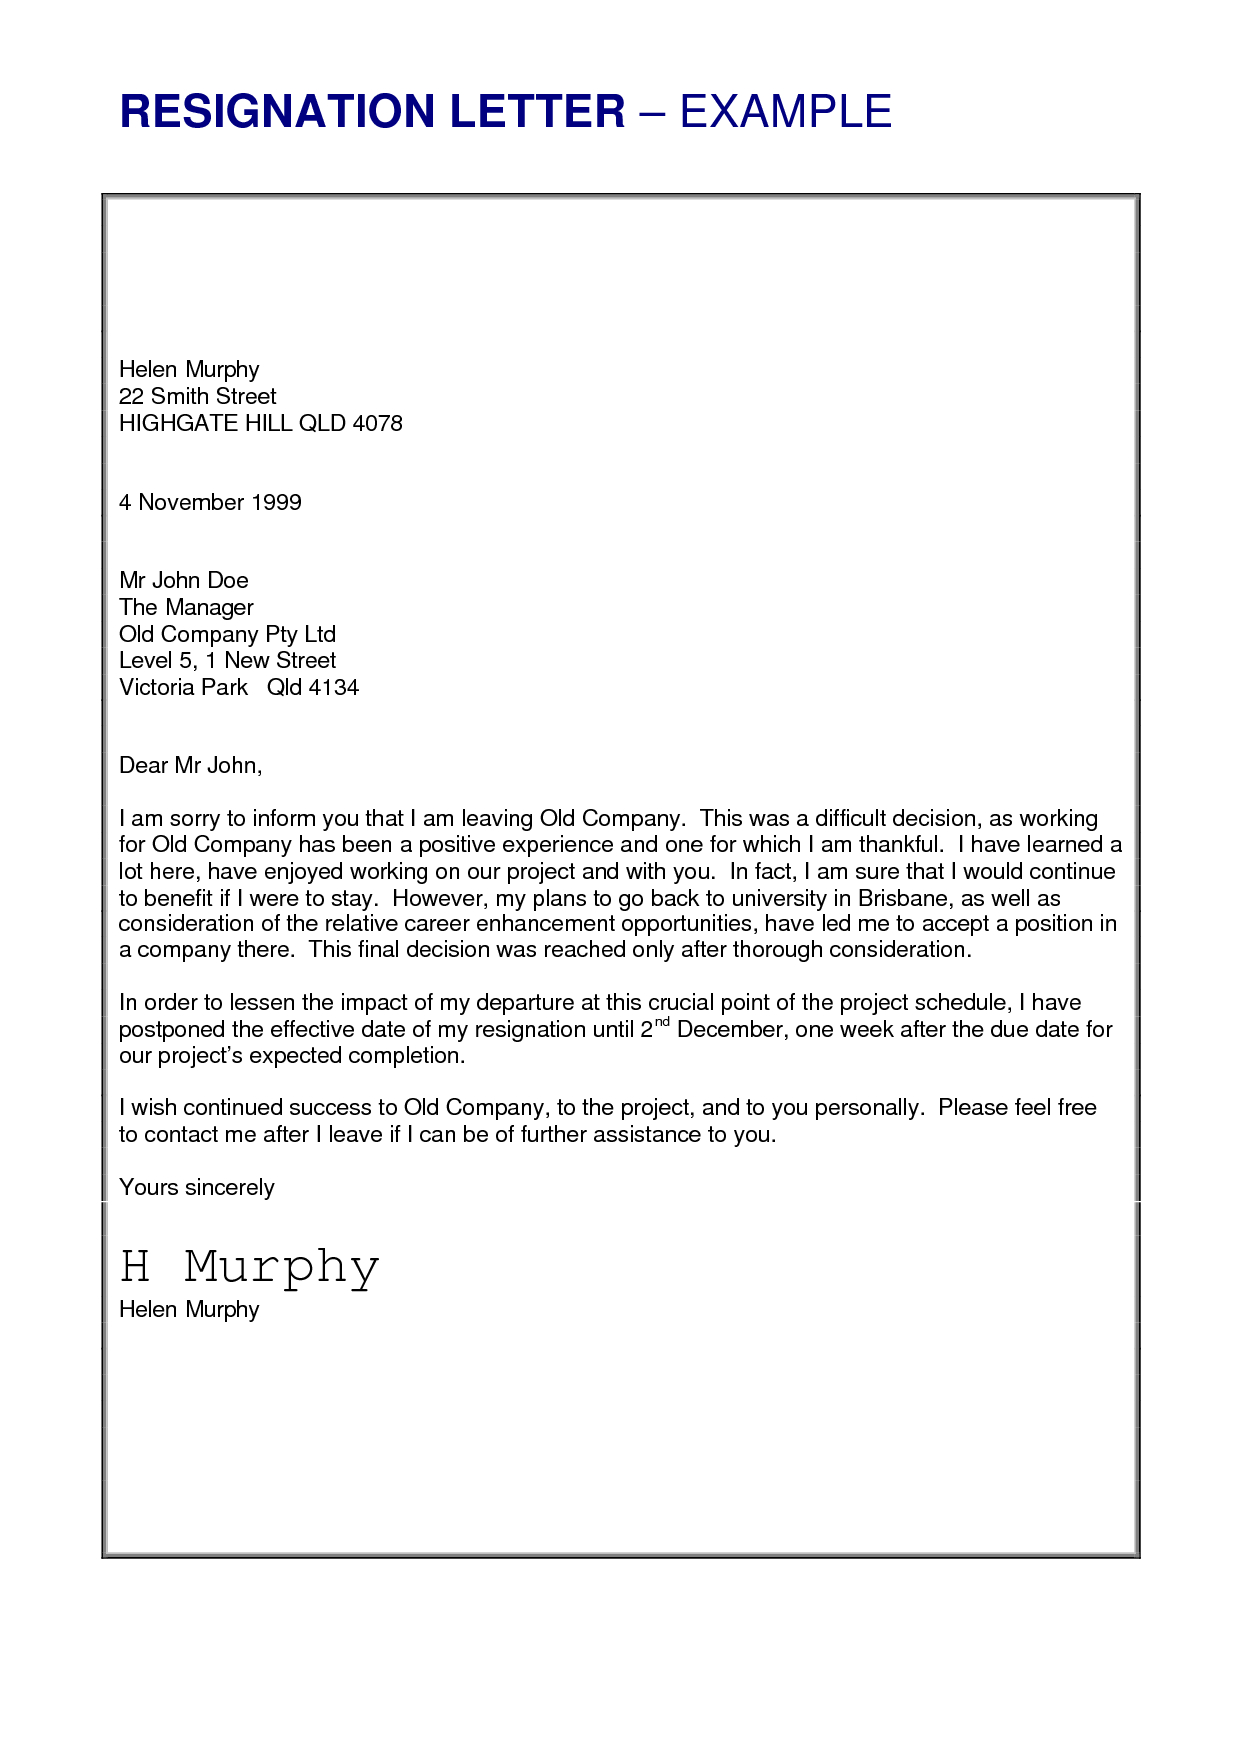 Microsoft Office Resignation Letter Template - Job Resignation Letter Sample Loganun Blog Job